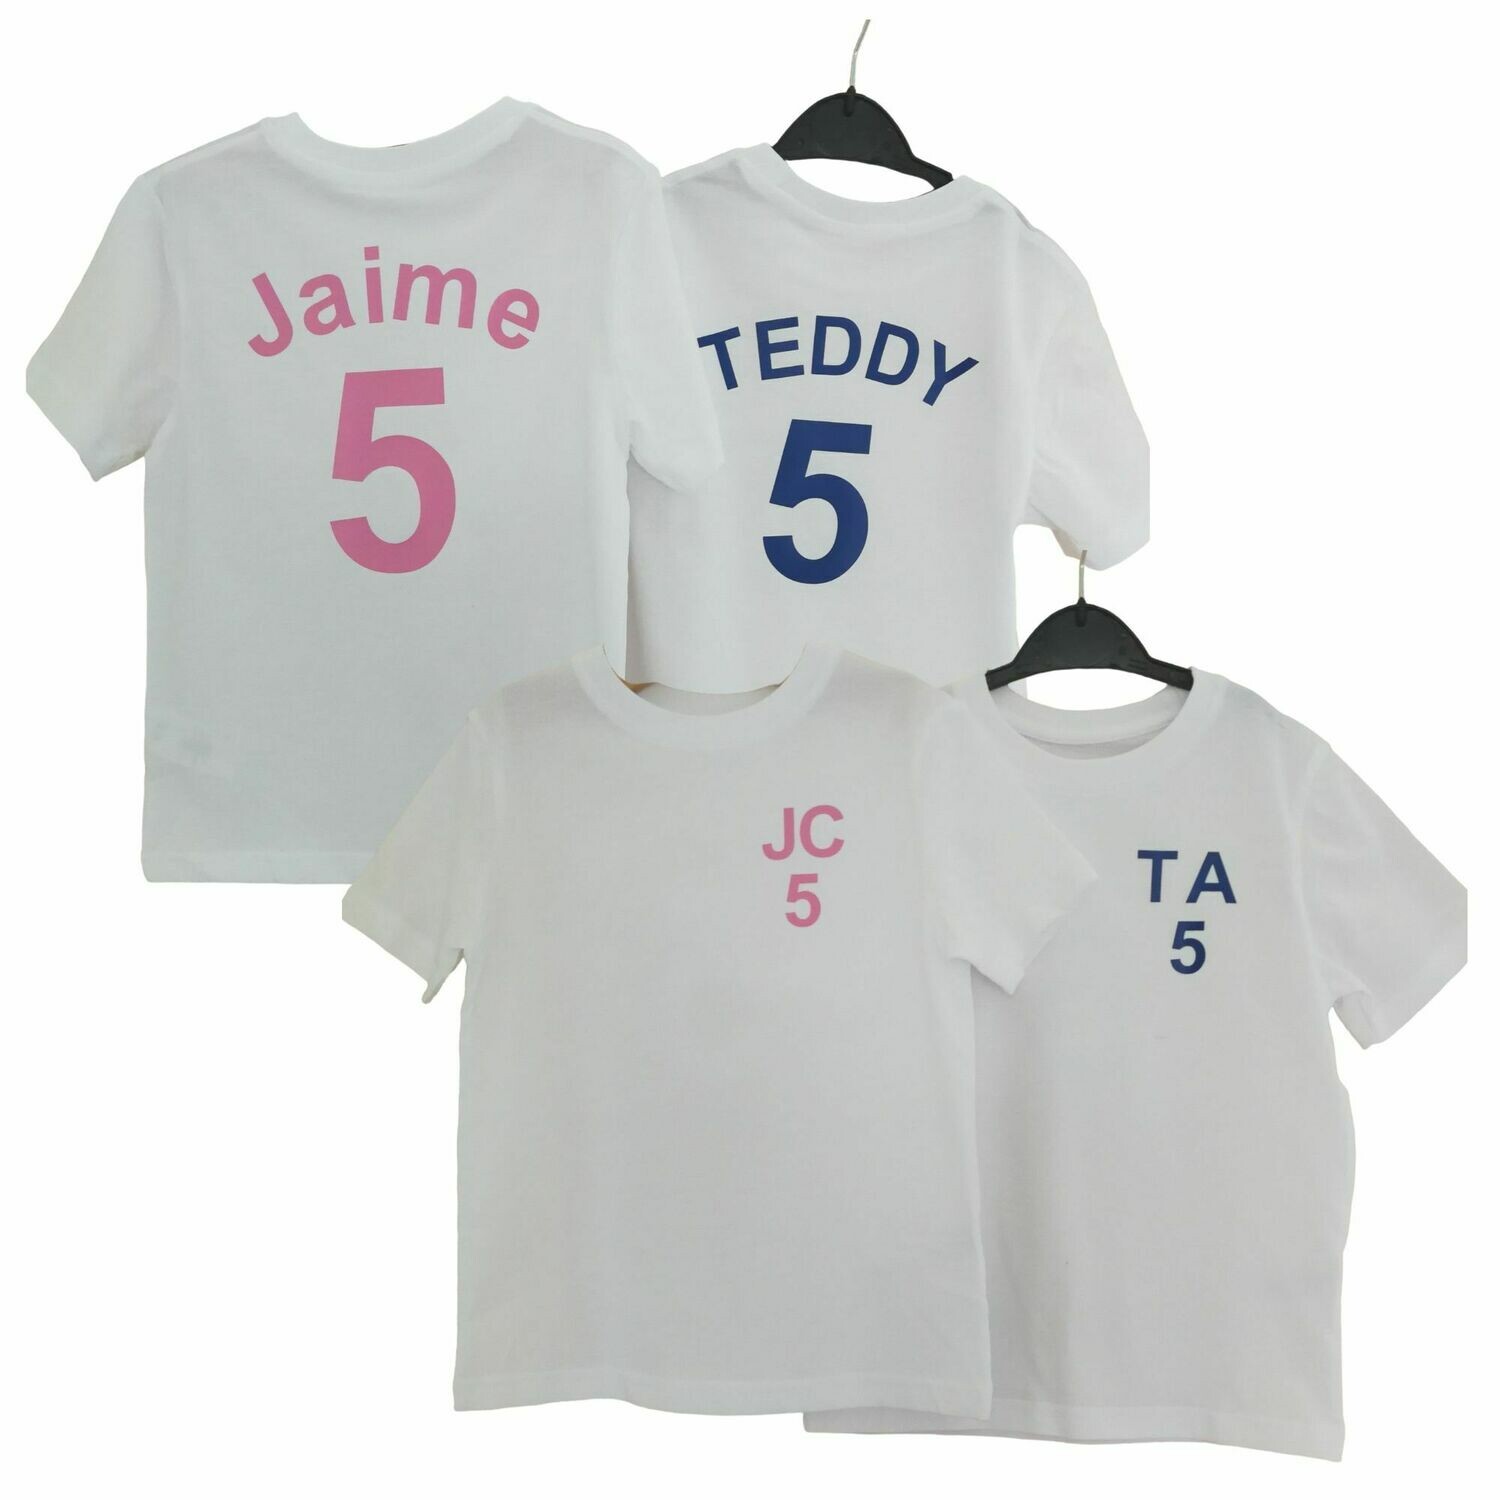 Personalised Children's Football Shirt - Boys or Girls